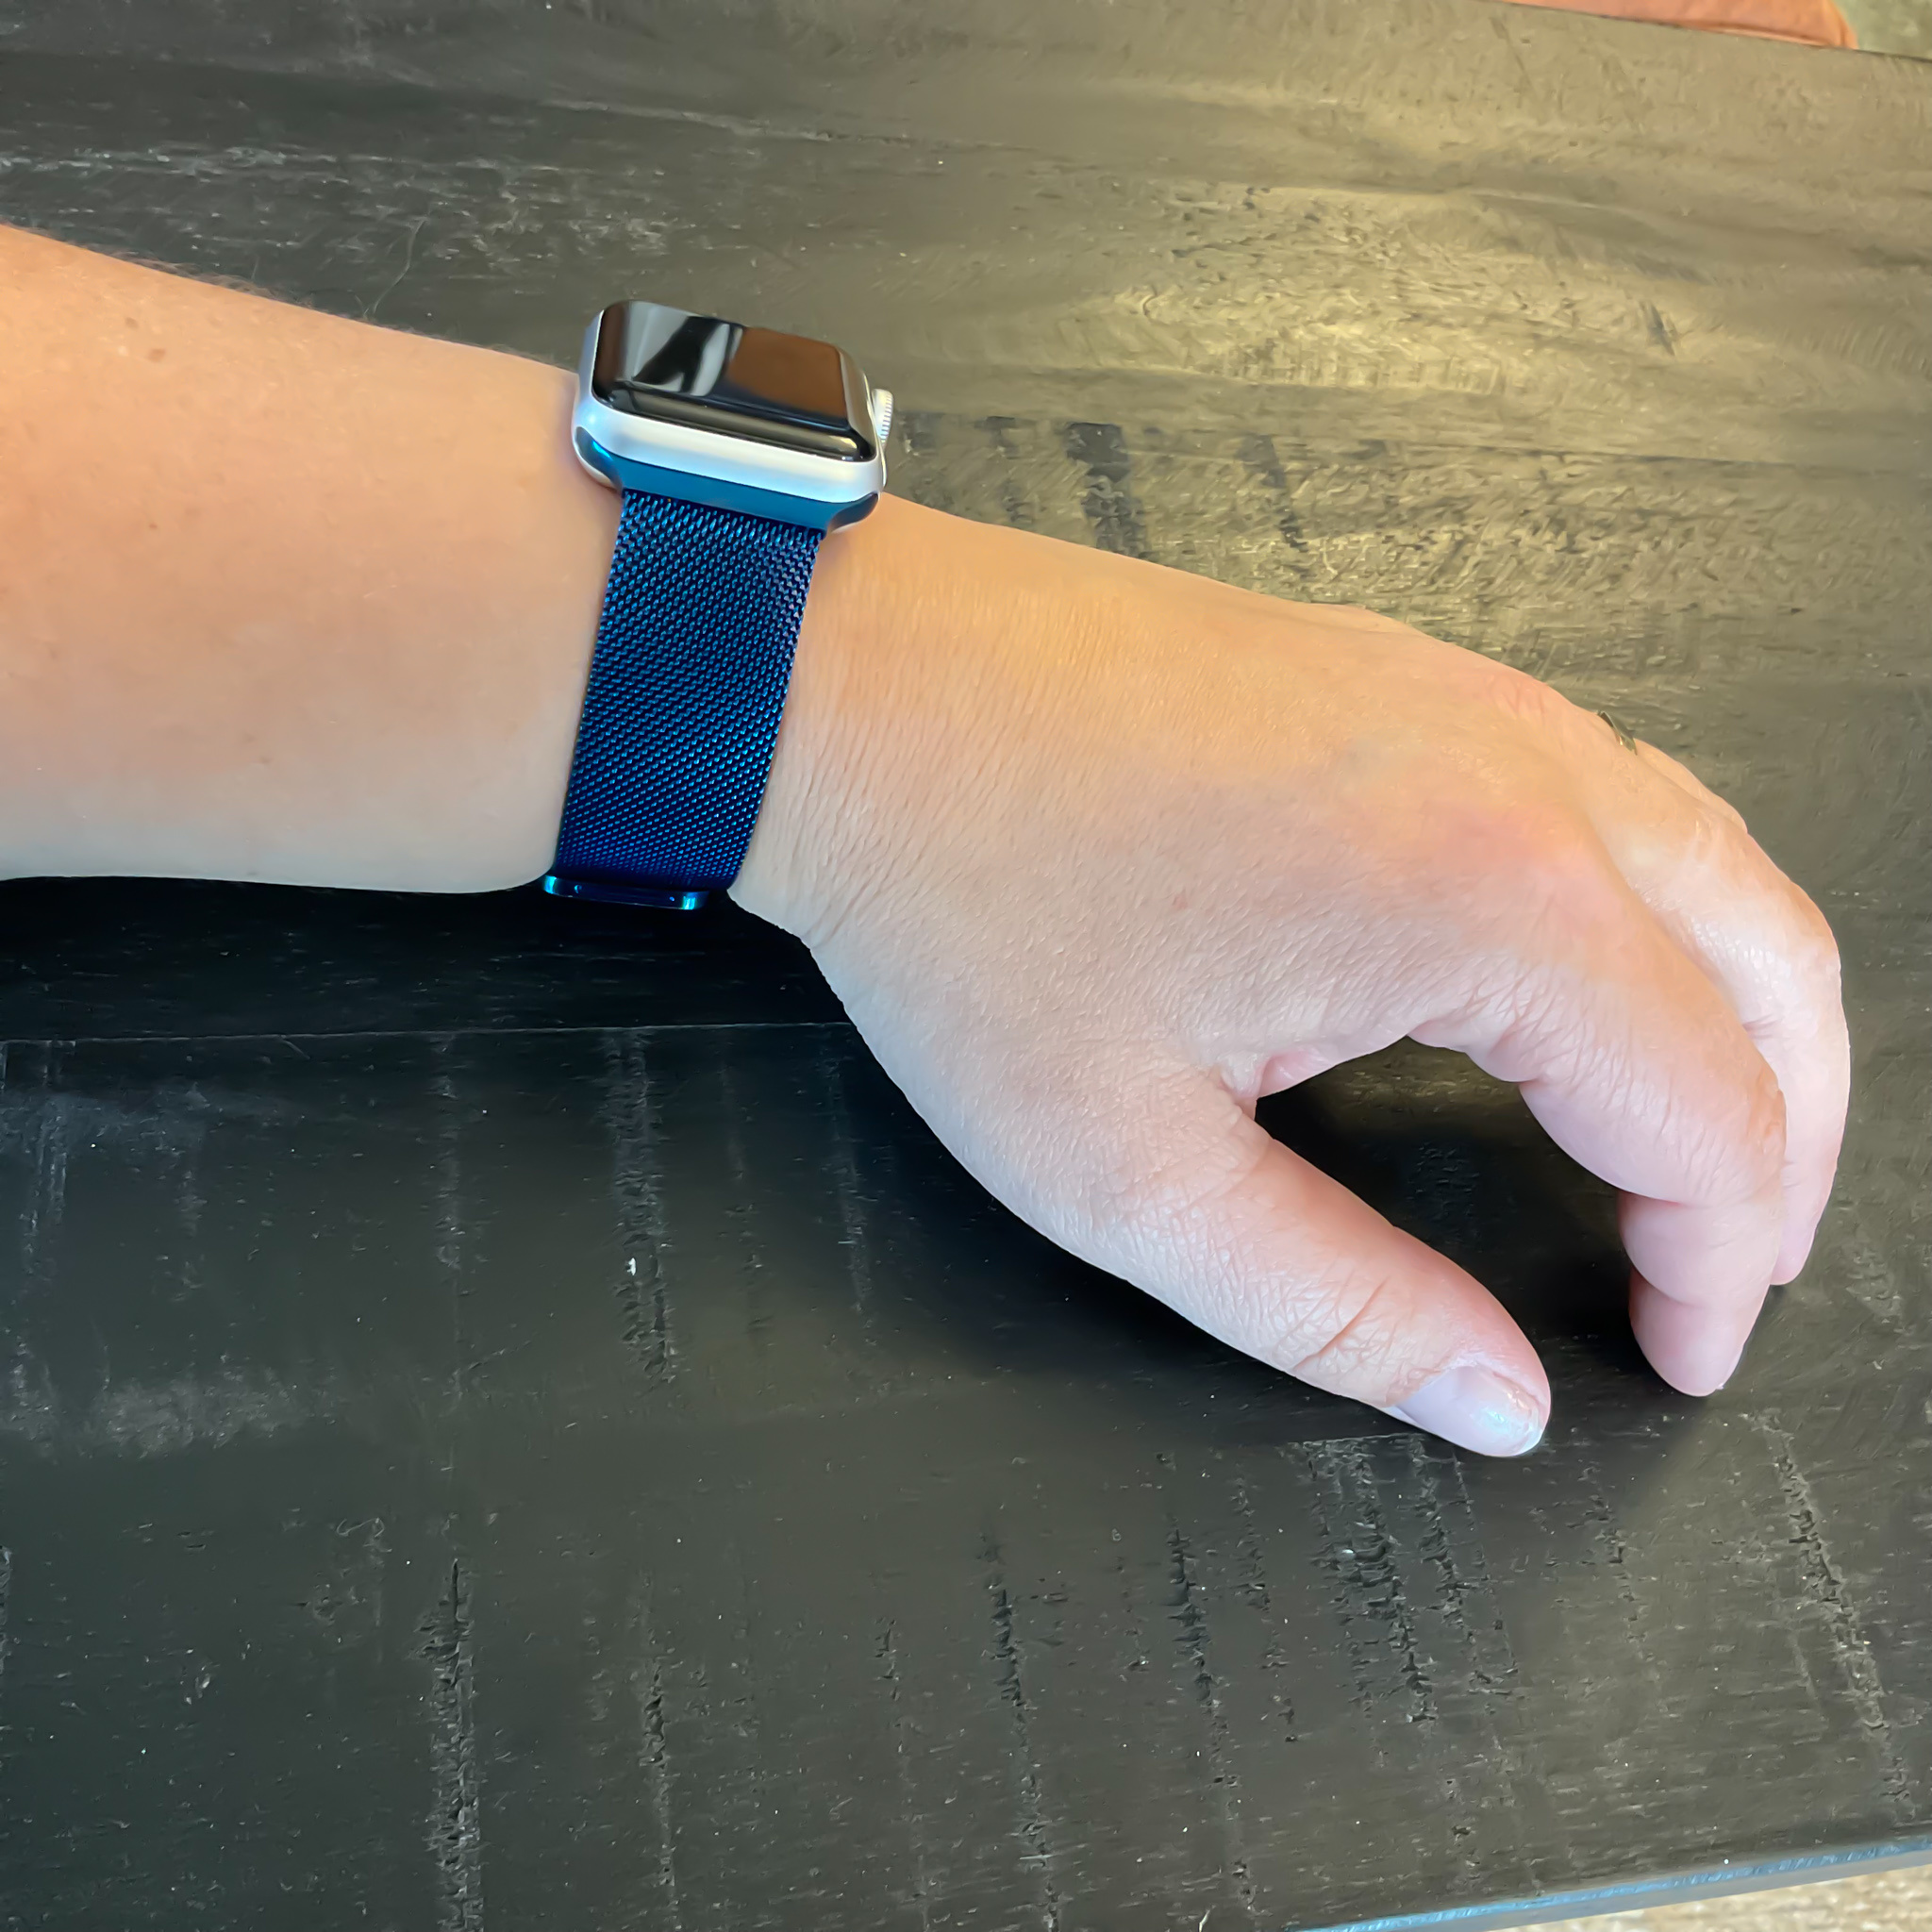 Apple Watch Milanaise Armband - blau